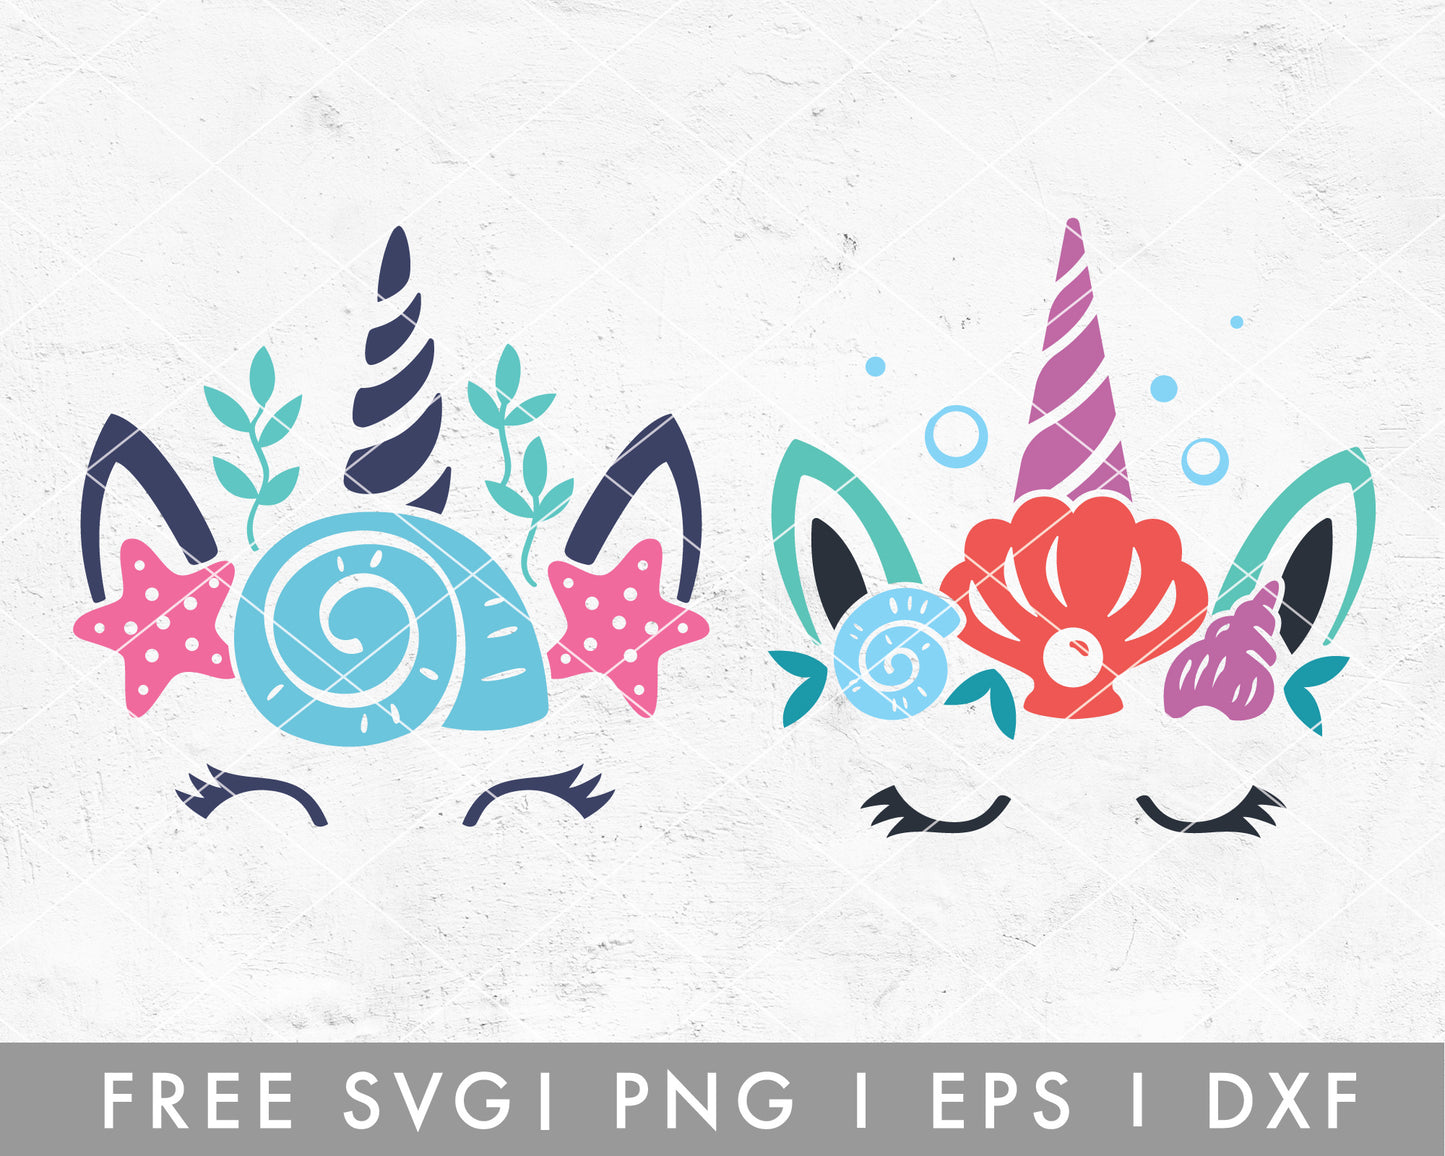 FREE Mermaid SVG | Mermaid Unicorn Cut File for Cricut, Cameo Silhouette | Free SVG Cut File